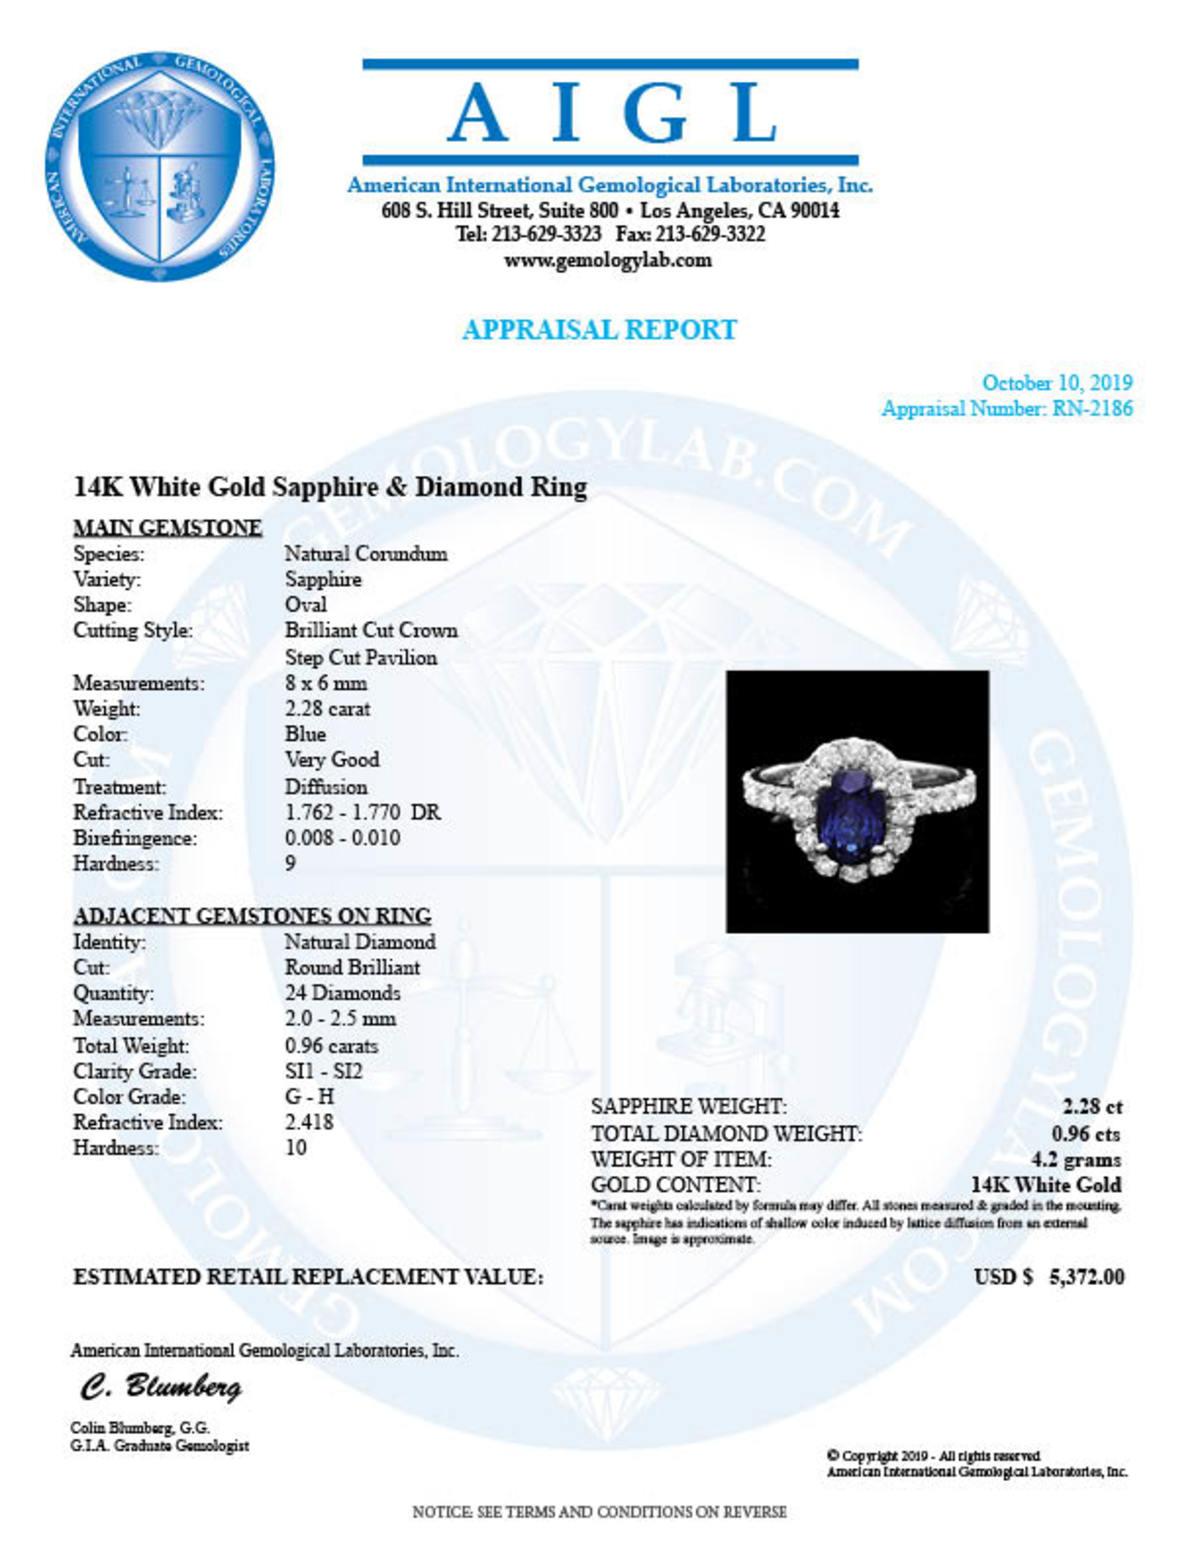 14K White Gold 2.28ct Sapphire and 0.96ct Diamond Ring